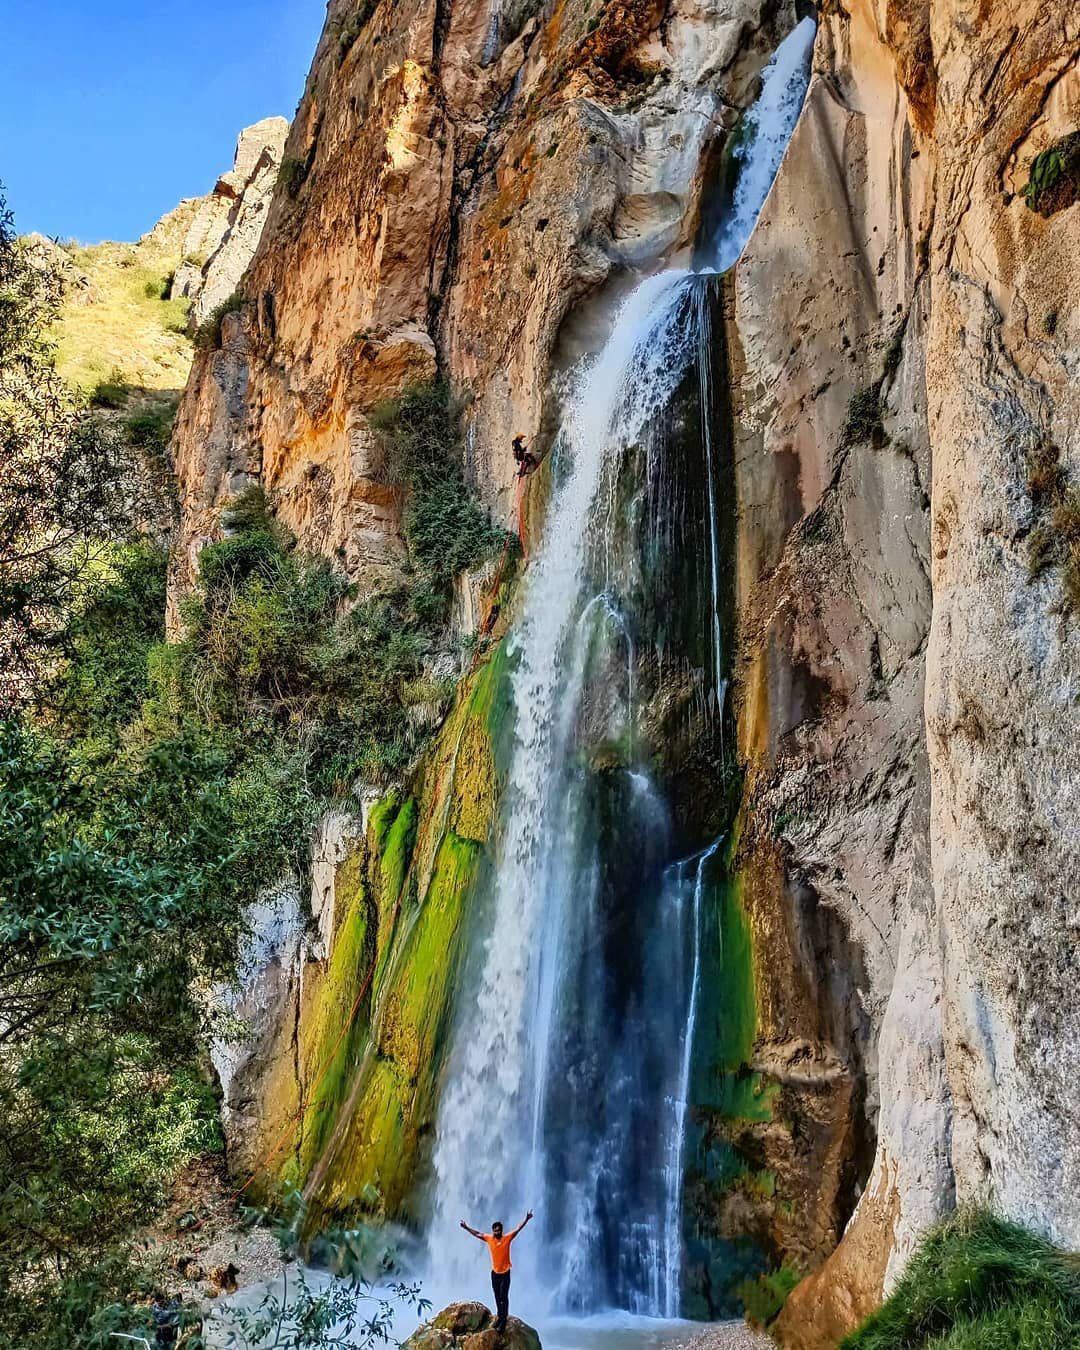 آبشار شاهاندشت, Shahandasht Waterfall